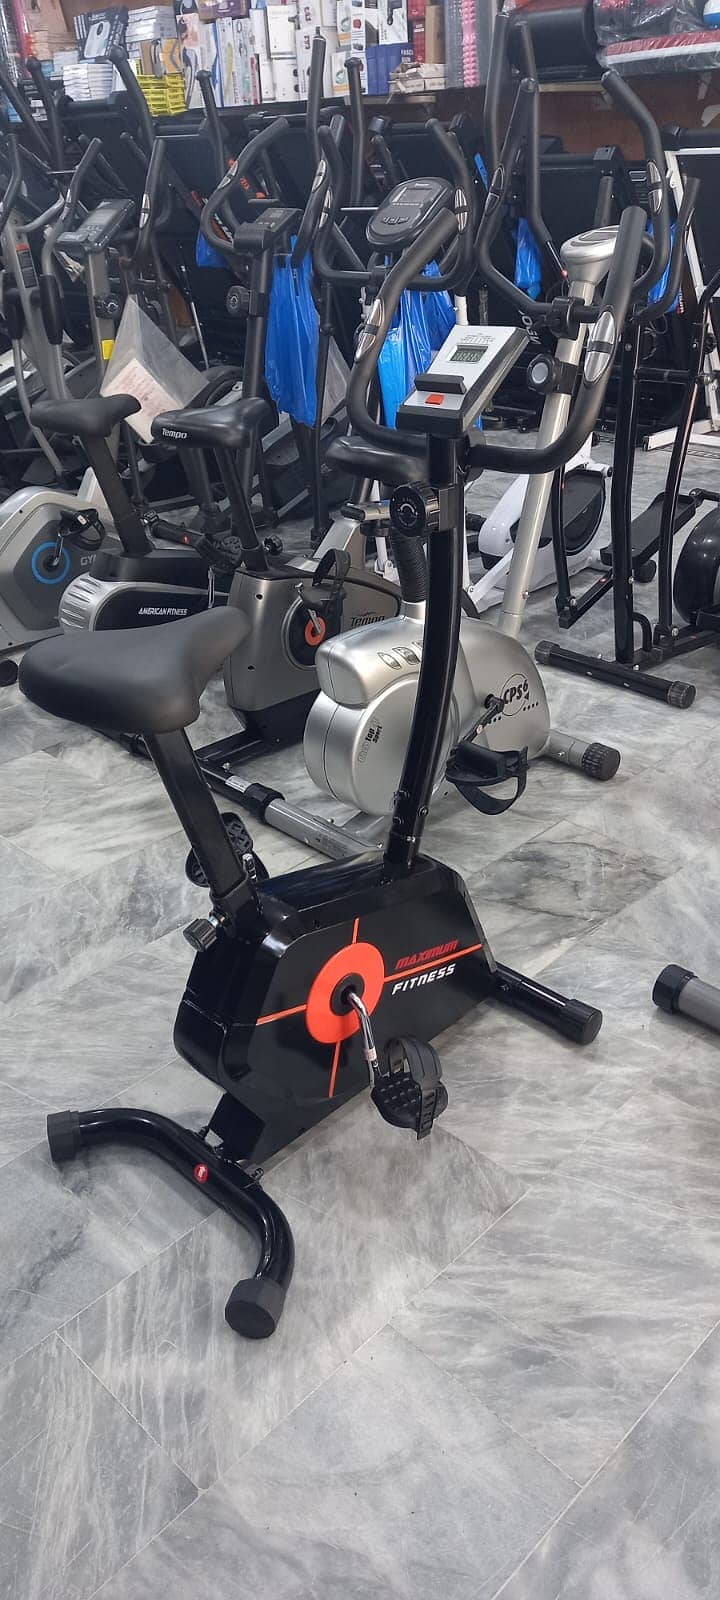 elliptical Exercise treadmill recumbent upright bike spin bike DUMBBEL 7